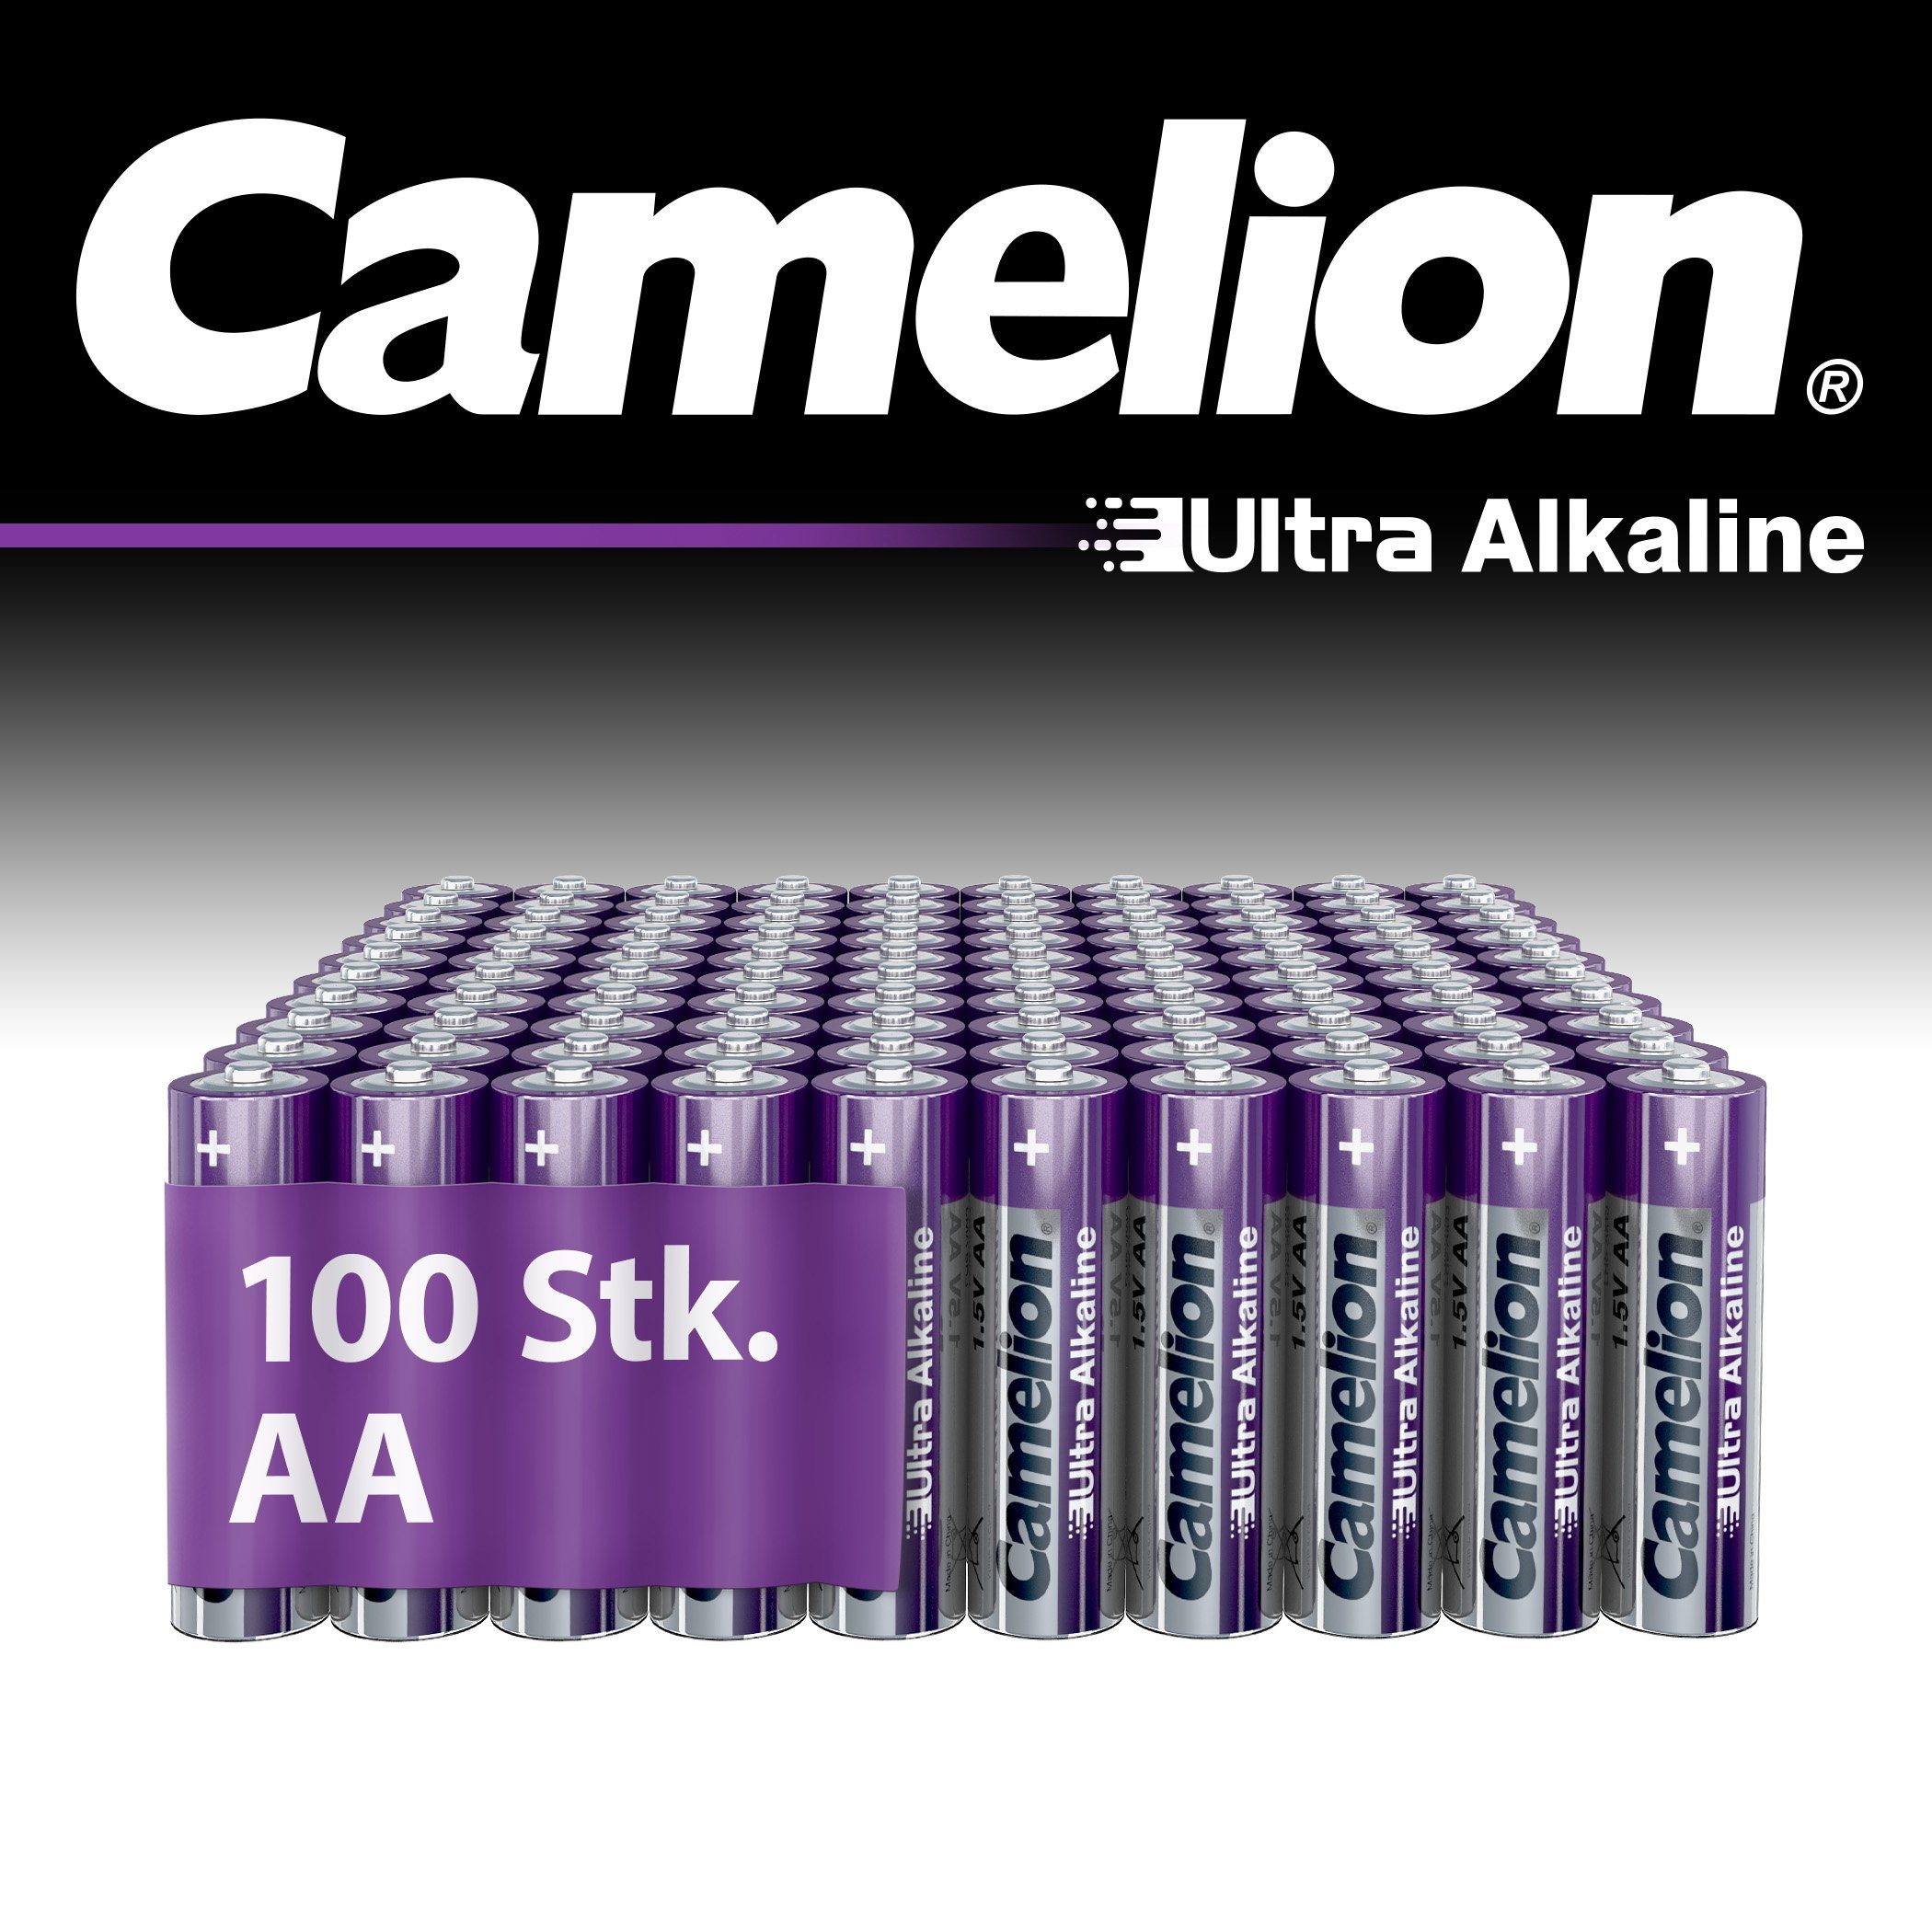 Camelion 100 x Camelion Ultra Alkaline AA (100 St) Batterie